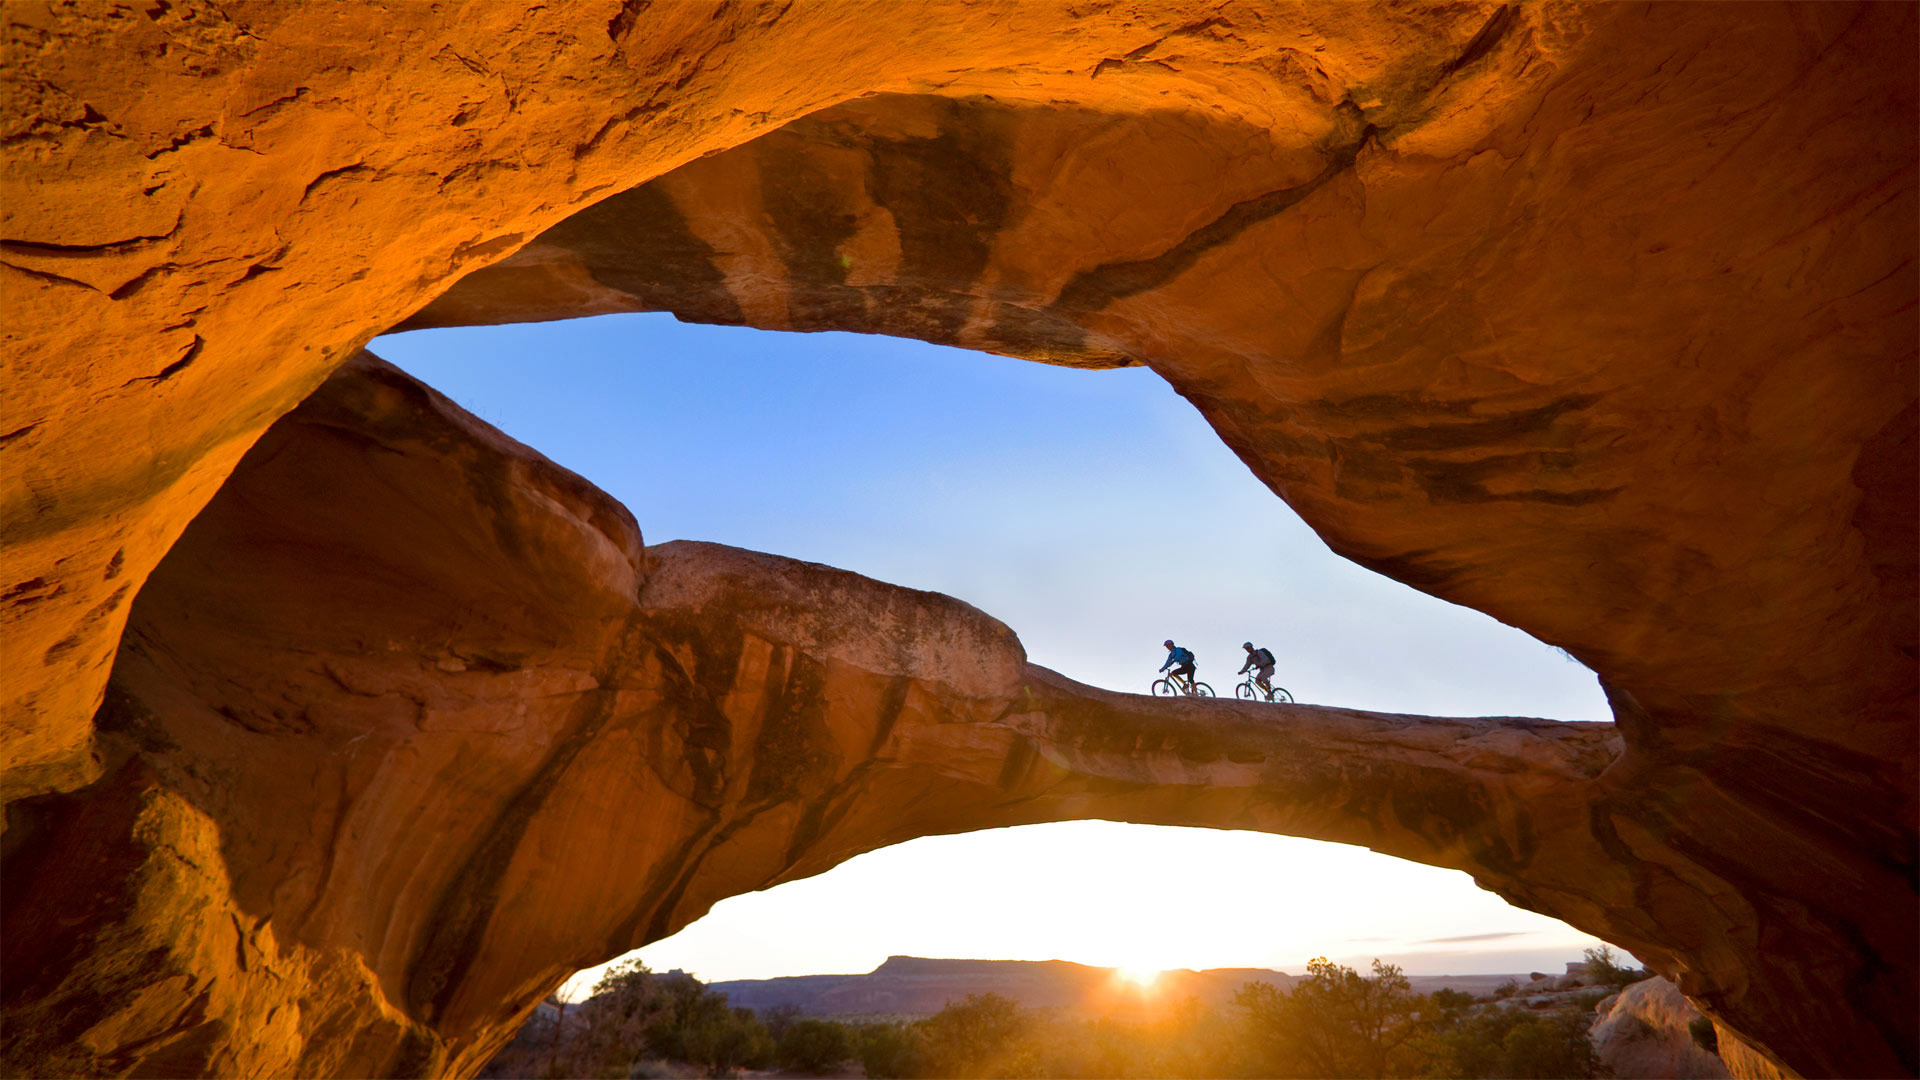 Cycling across a natural rock arch in the desert near Moab, Utah - Whit Richardson/Cavan)